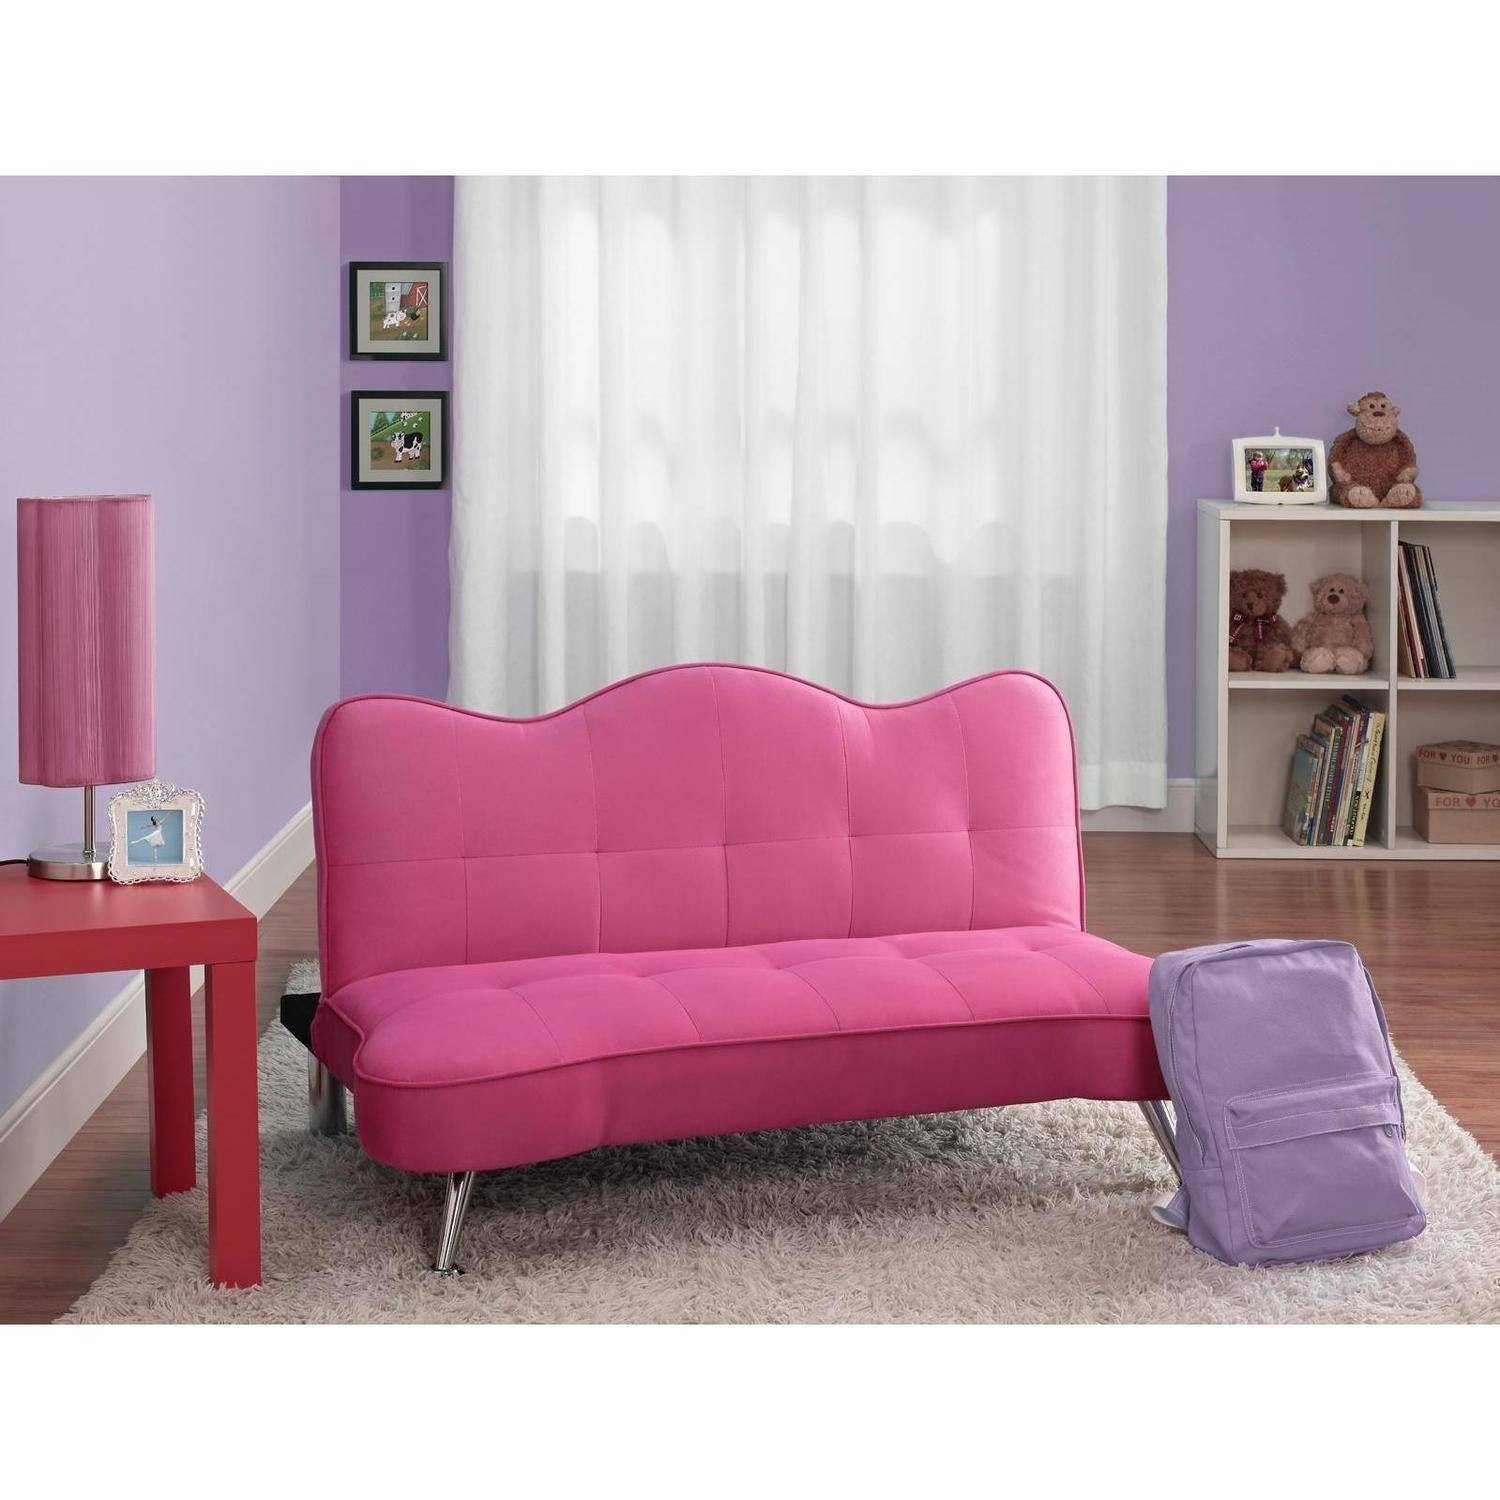 Dhp rose junior microfiber sofa futon lounger pink